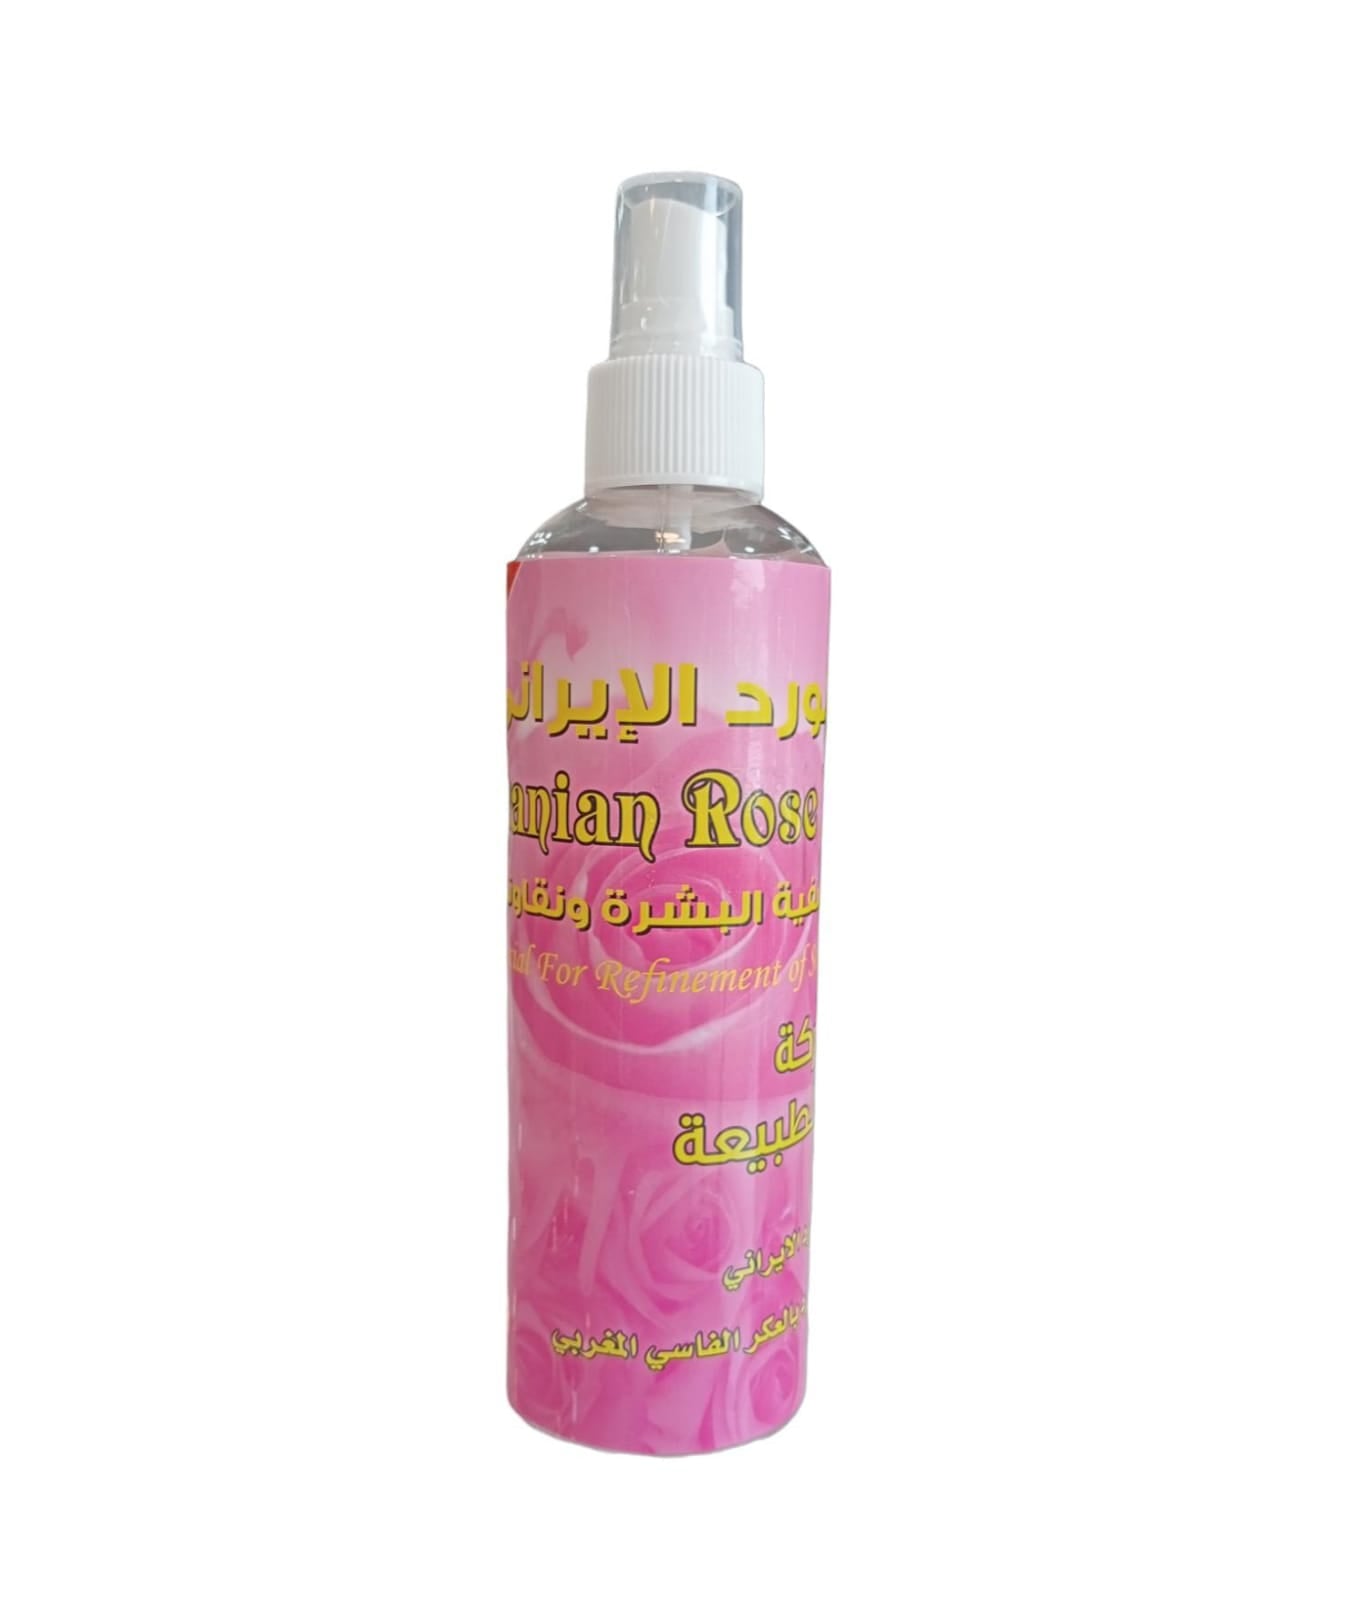 Iranian Rose Water Refinement Of Skin Spray